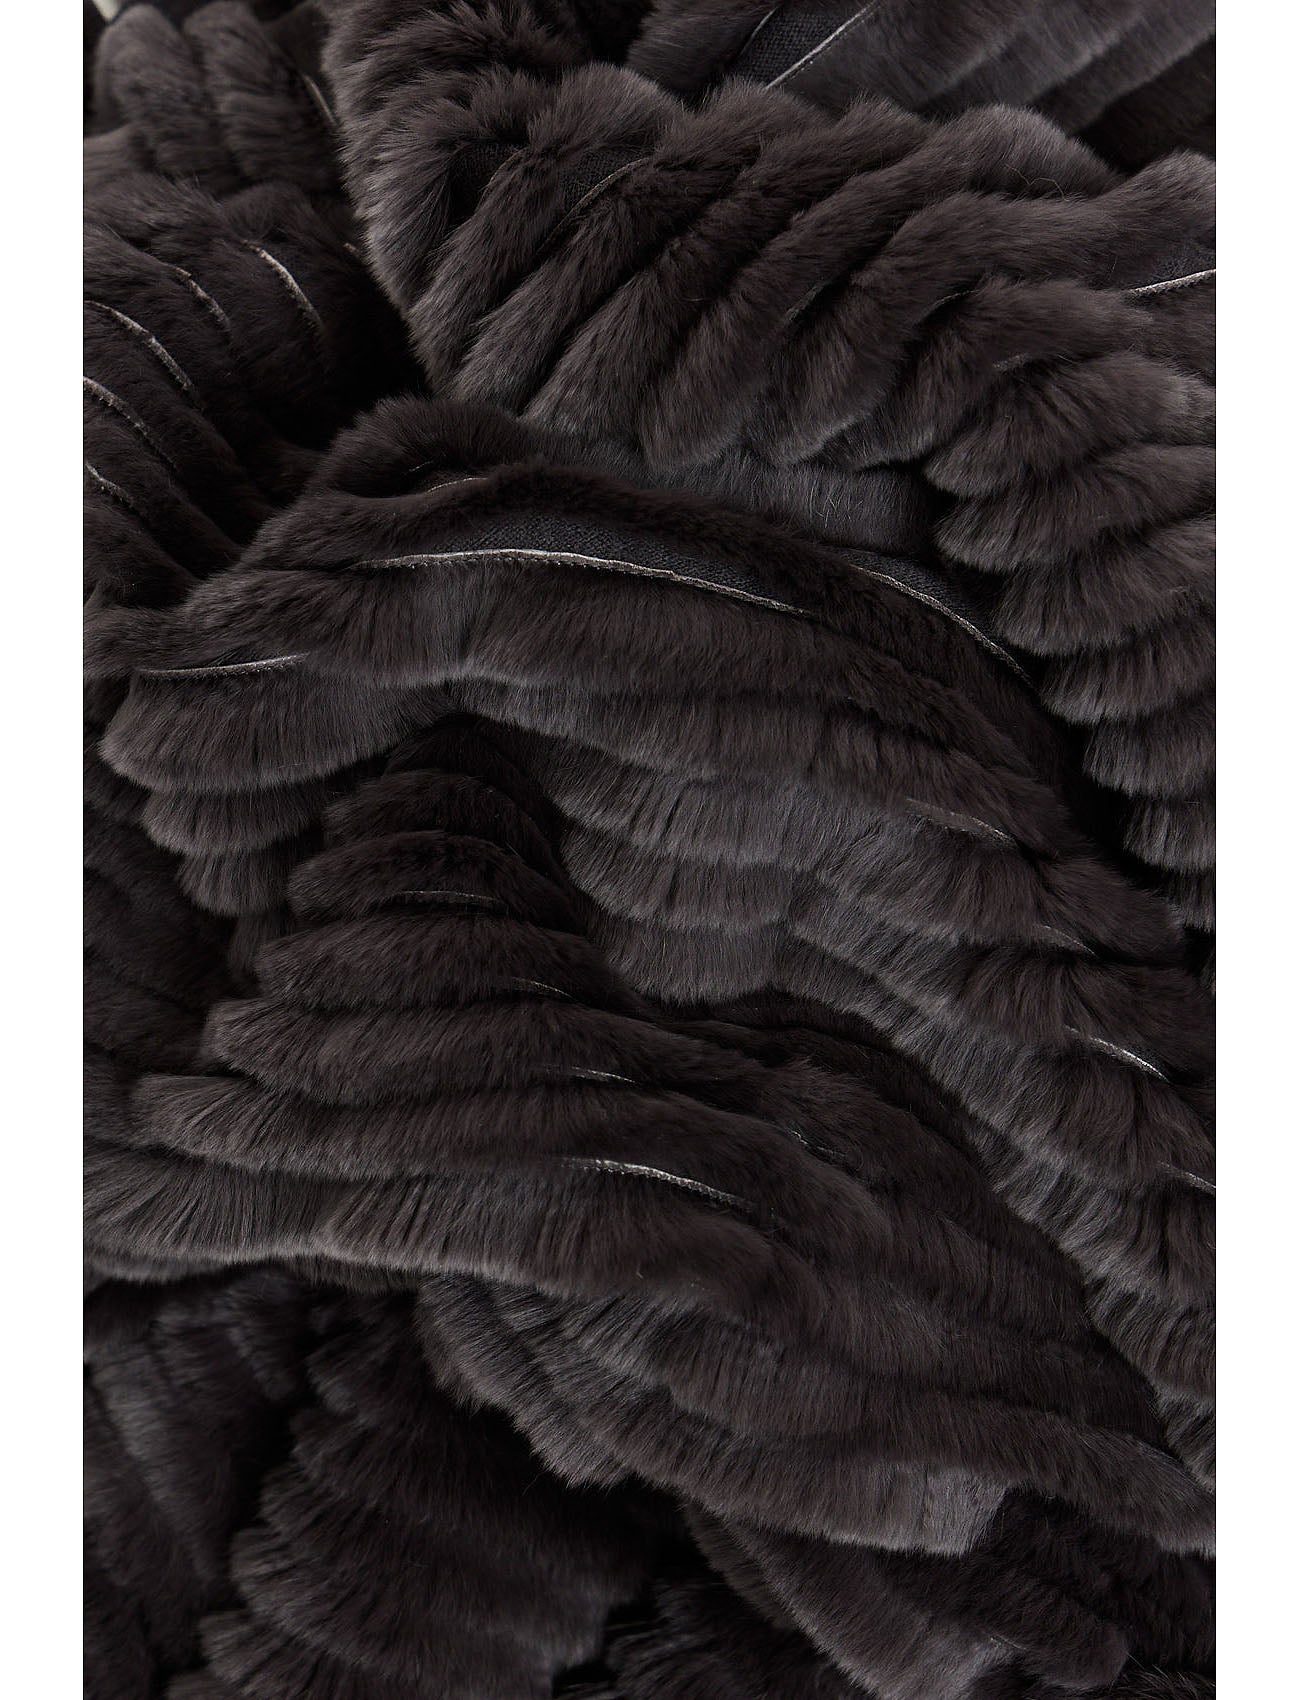 Felldecke auf Wolle - basalt grau - 140x170cm